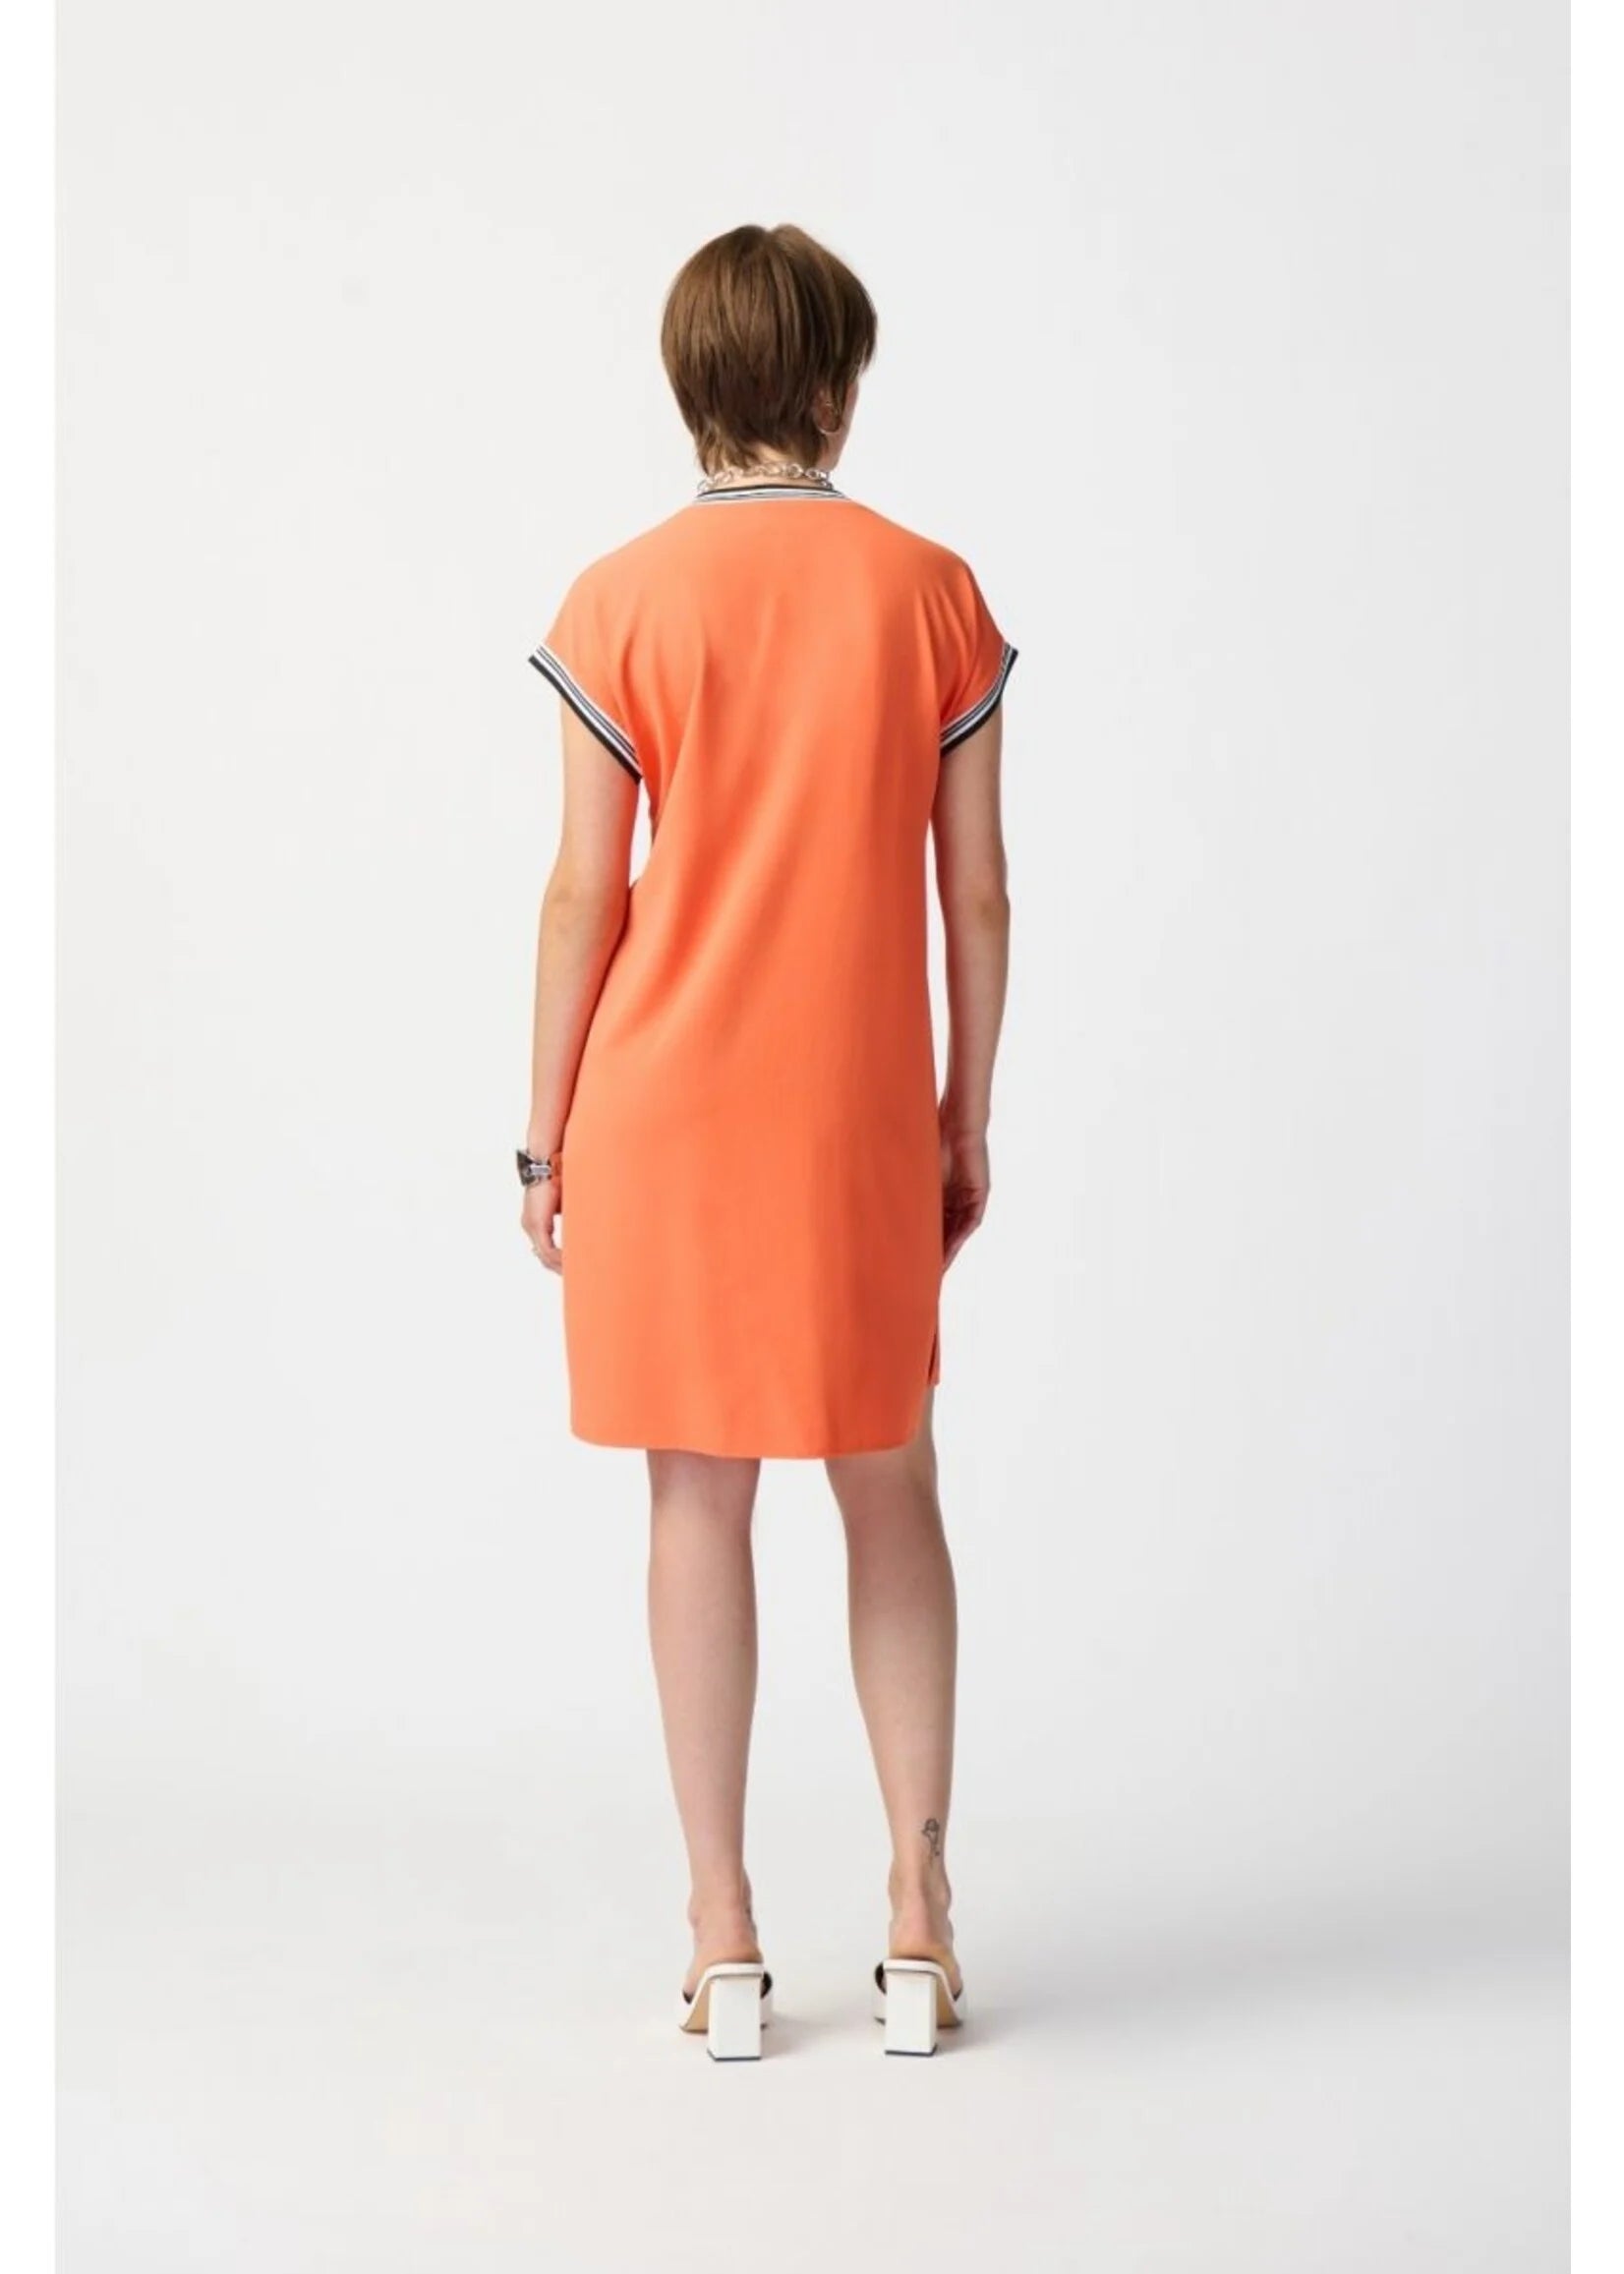 Joseph Ribkoff Orange Jersey Dress